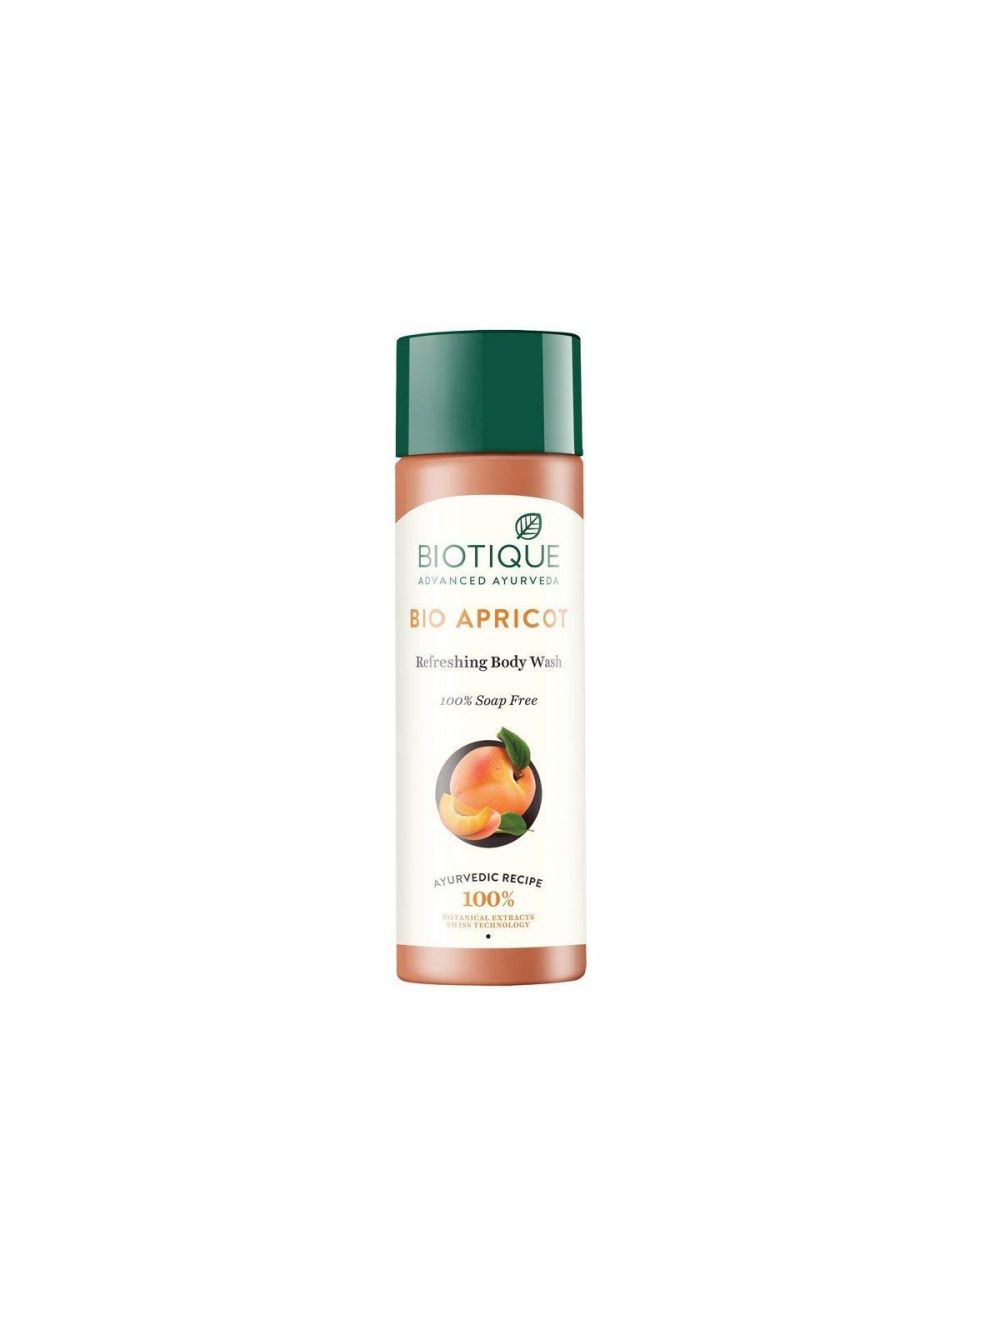 Biotique Bio Apricot Refreshing Body Wash 100% Soap Free (190ml) - Niram